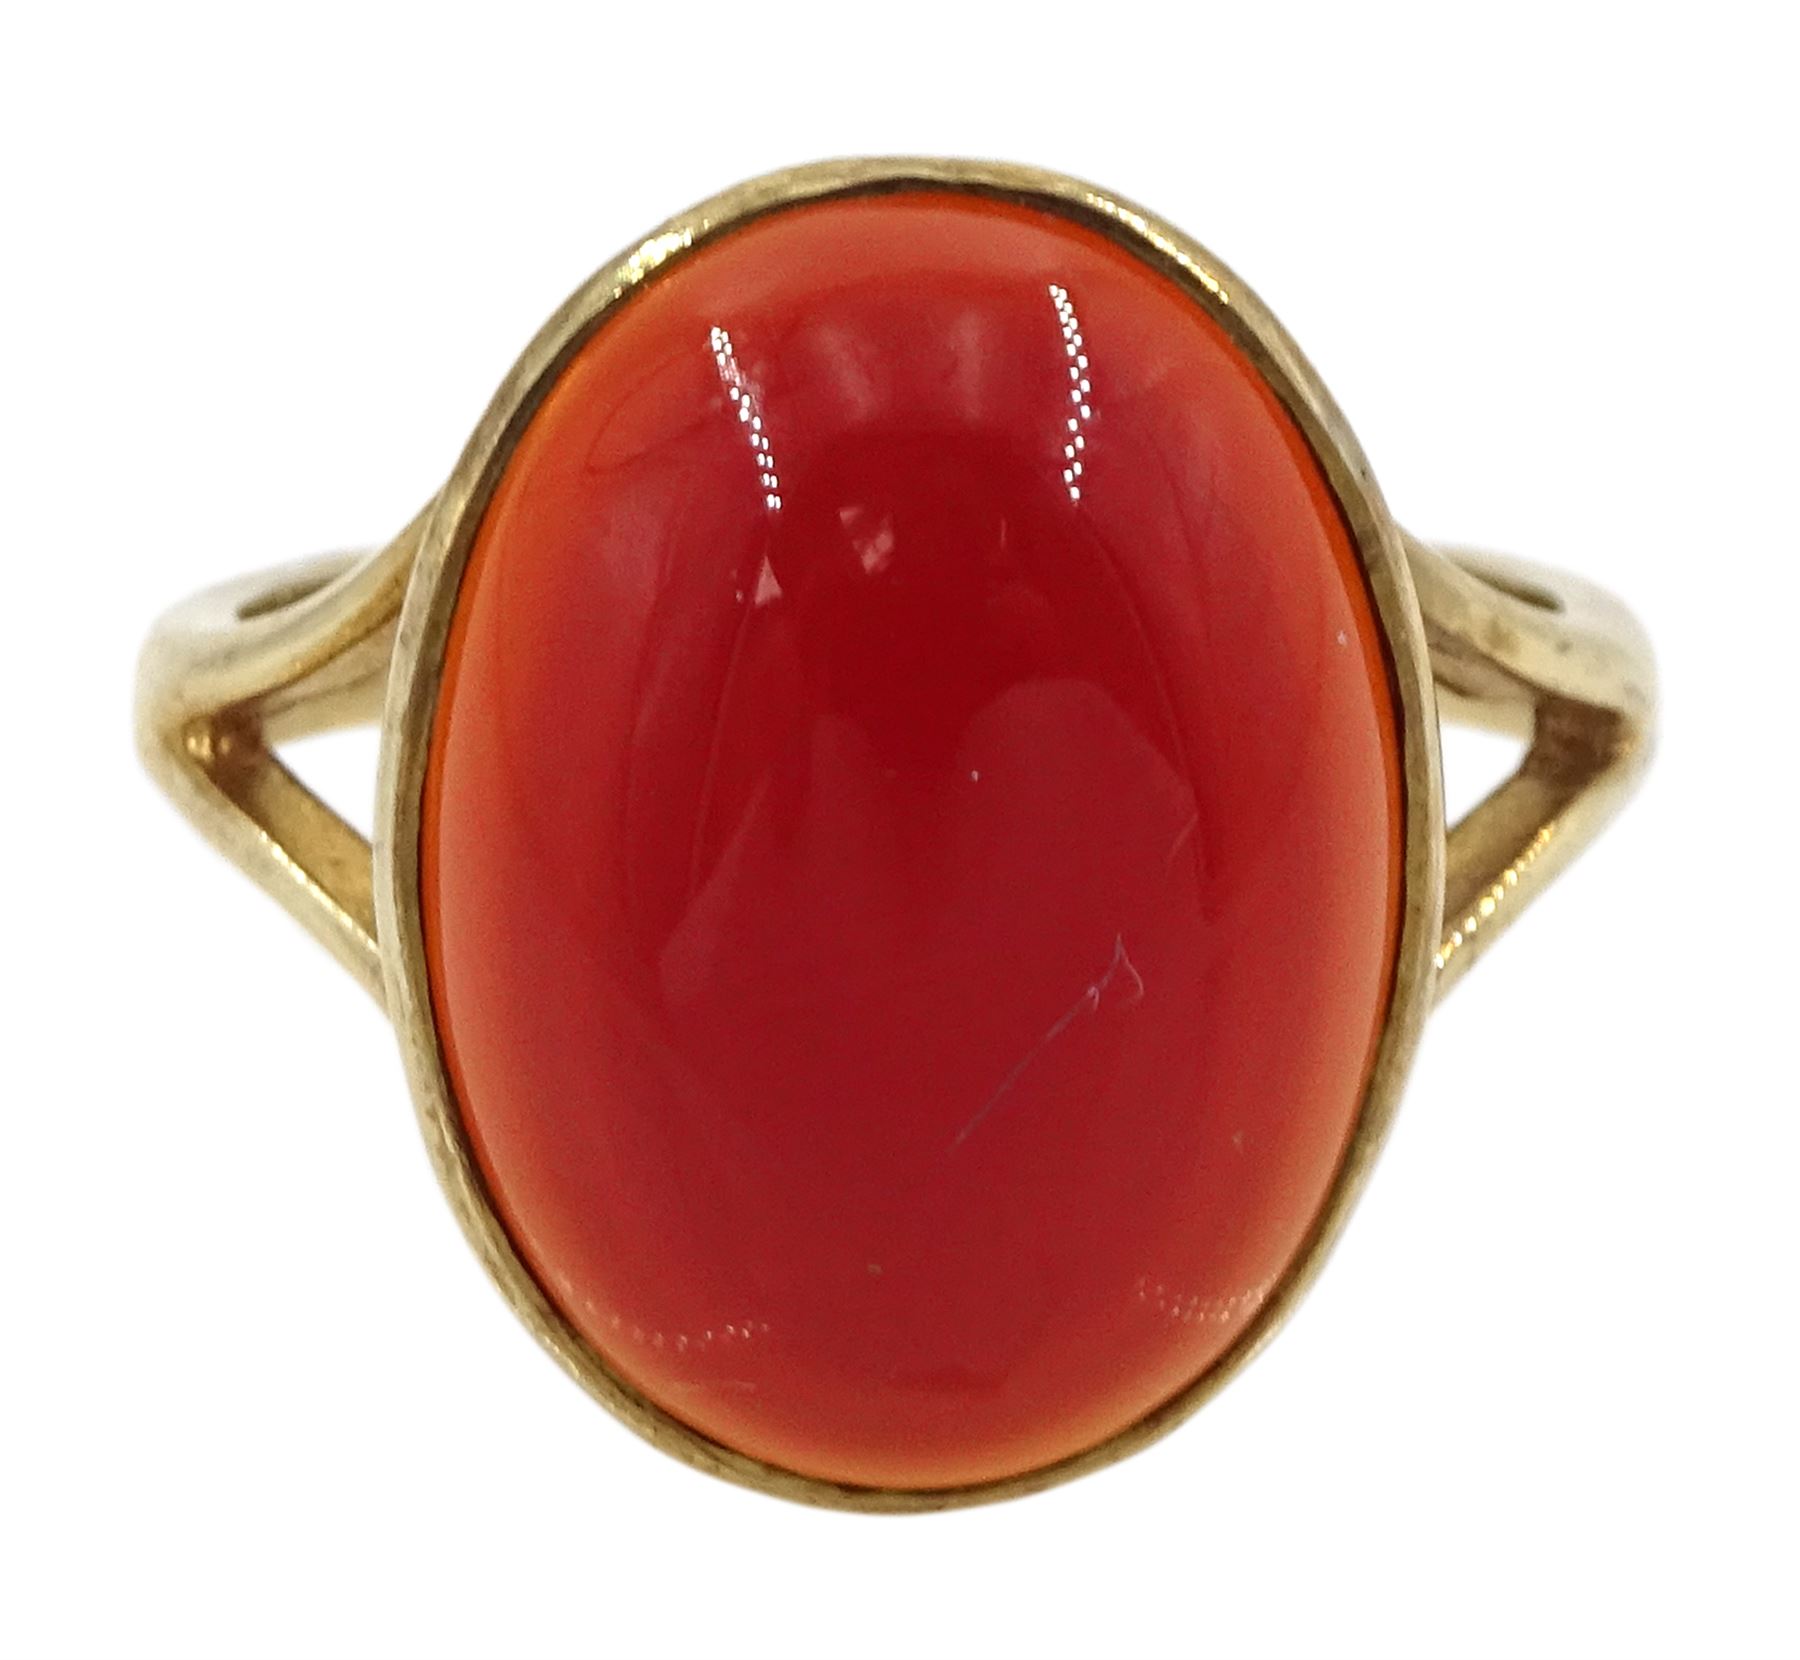 9ct gold single stone carnelian ring